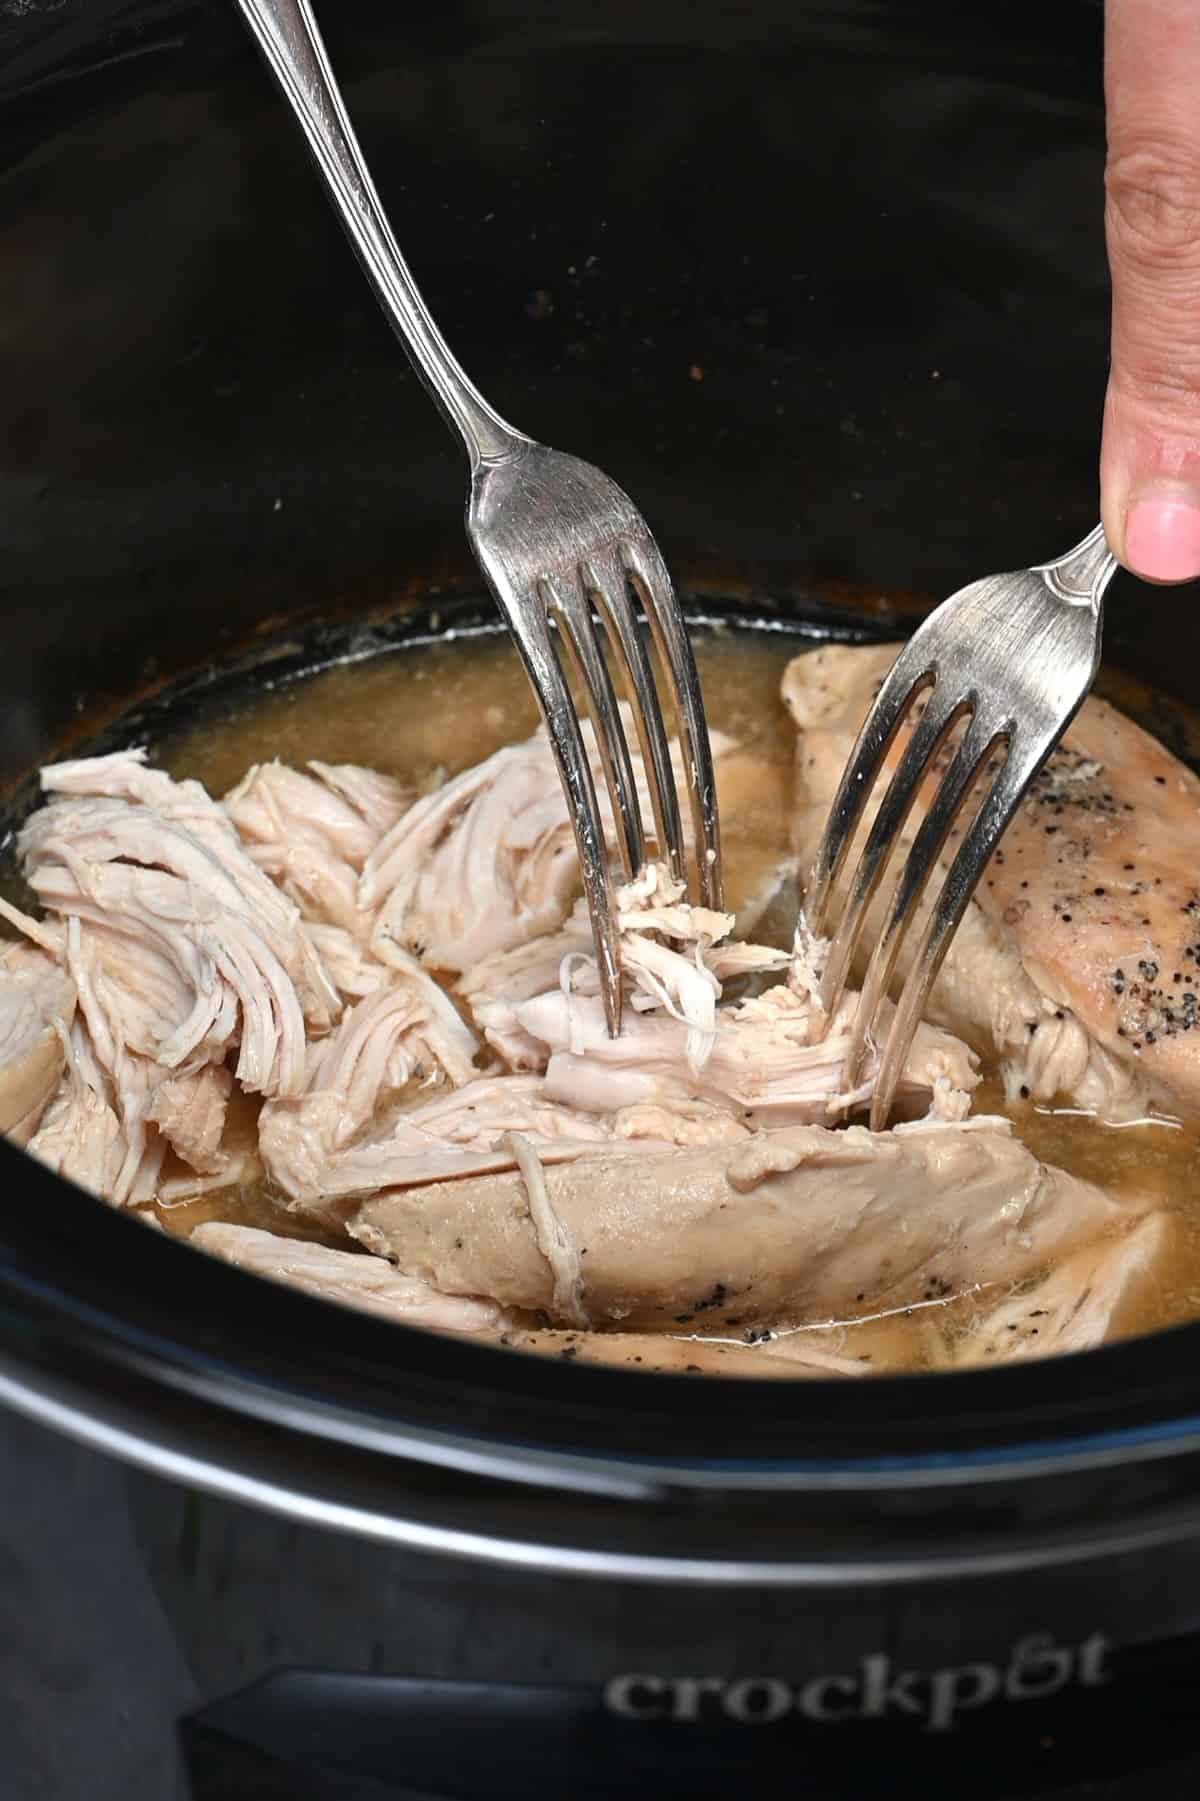 Shredding chicken with forks